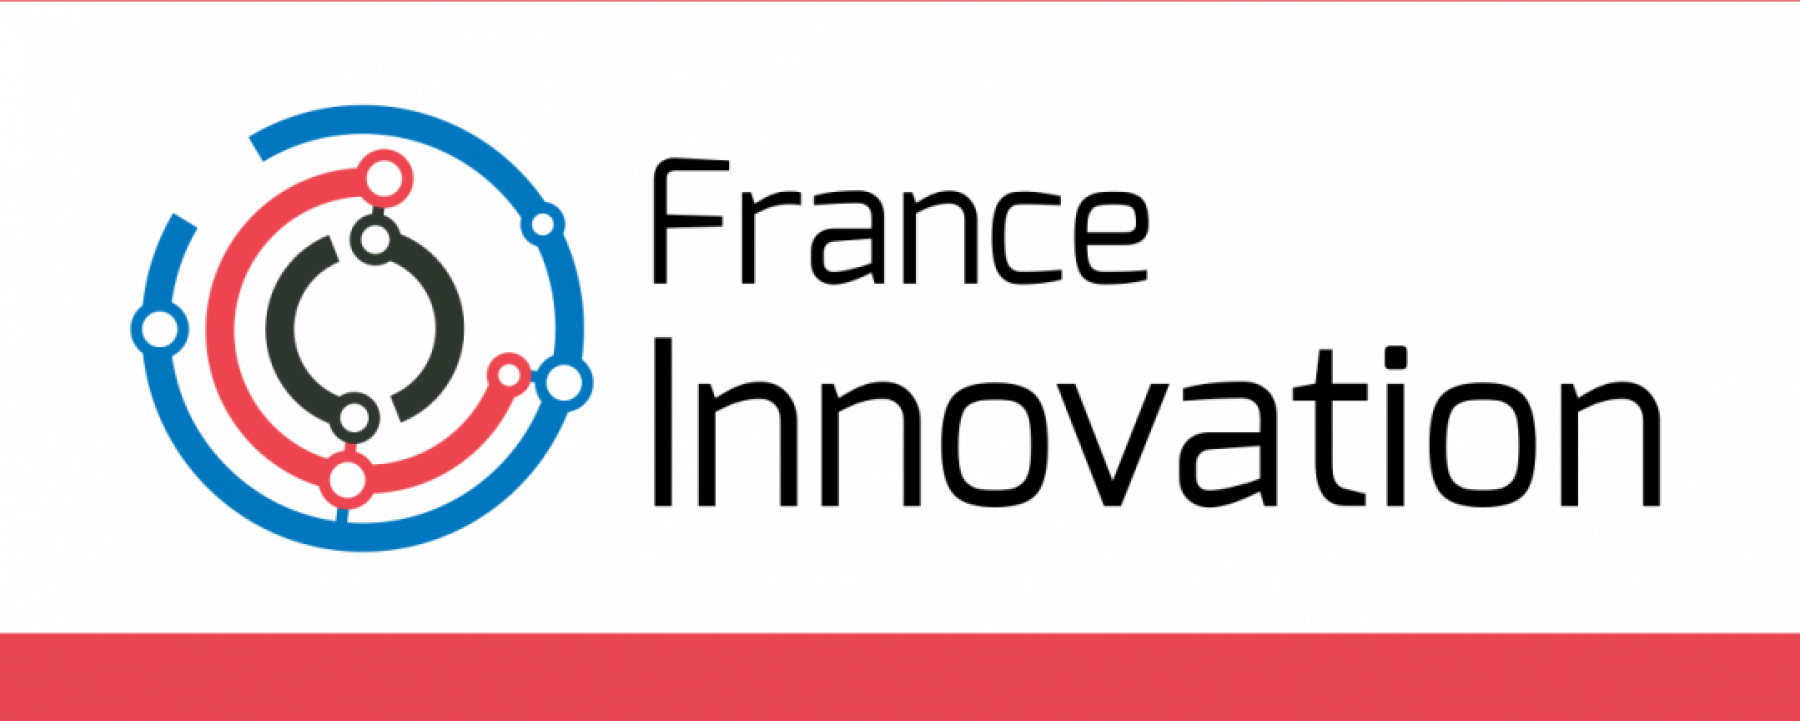 Webinar Présentation de France Innovation, le 23 avril 2020 organisé par France Innovation